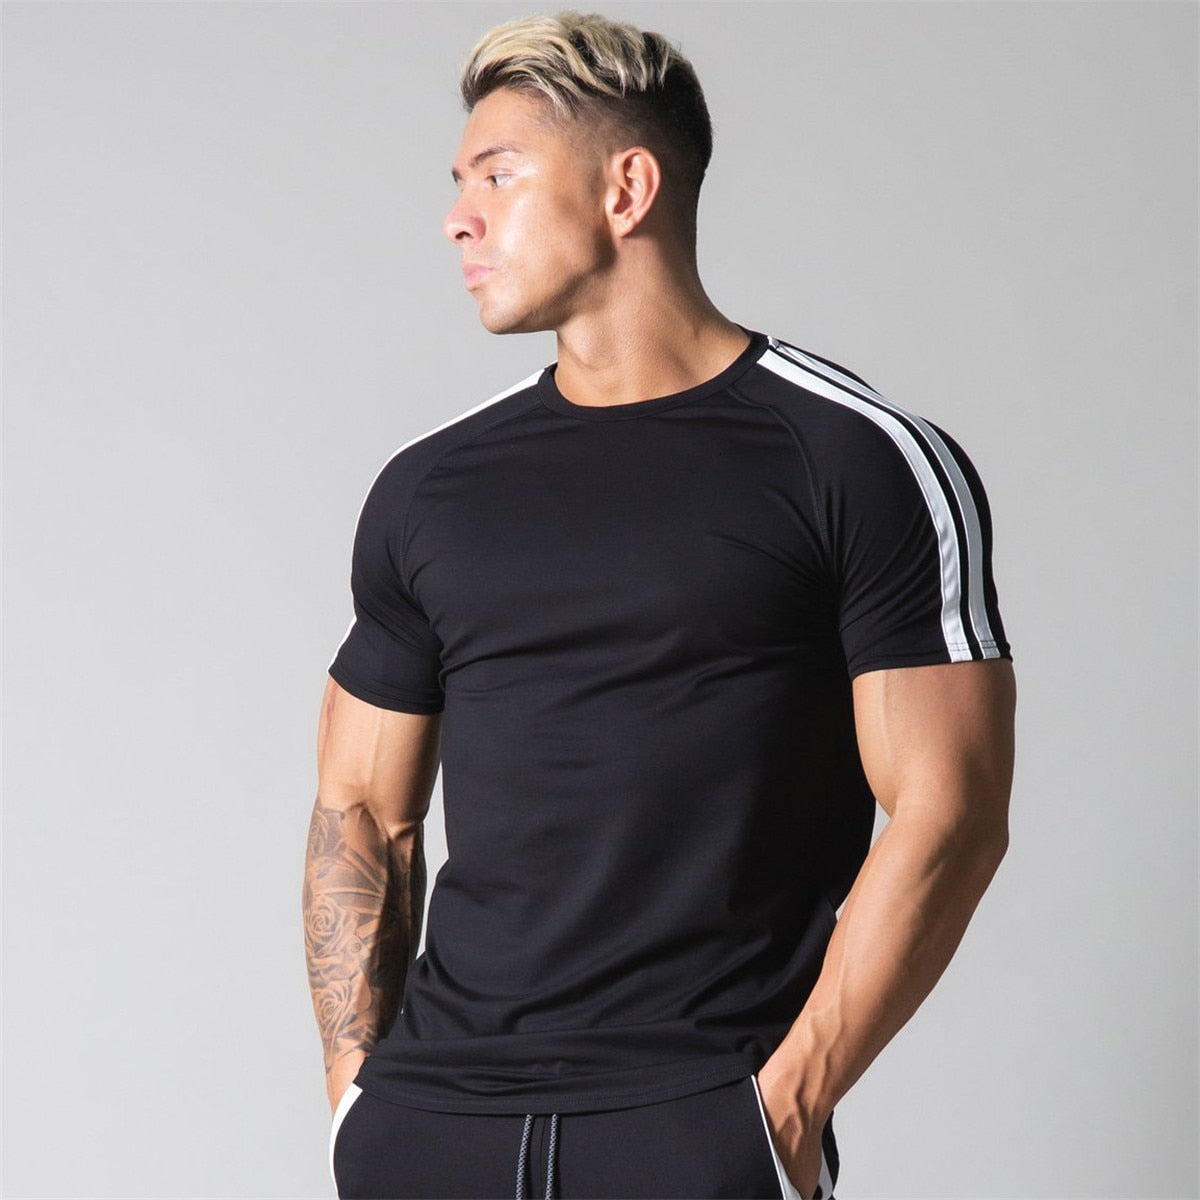 Black Gym Fitness T-shirt Men Running Sport Skinny Shirt Short Sleeve Cotton Tee Tops Summer Male Bodybuilding Training Clothing